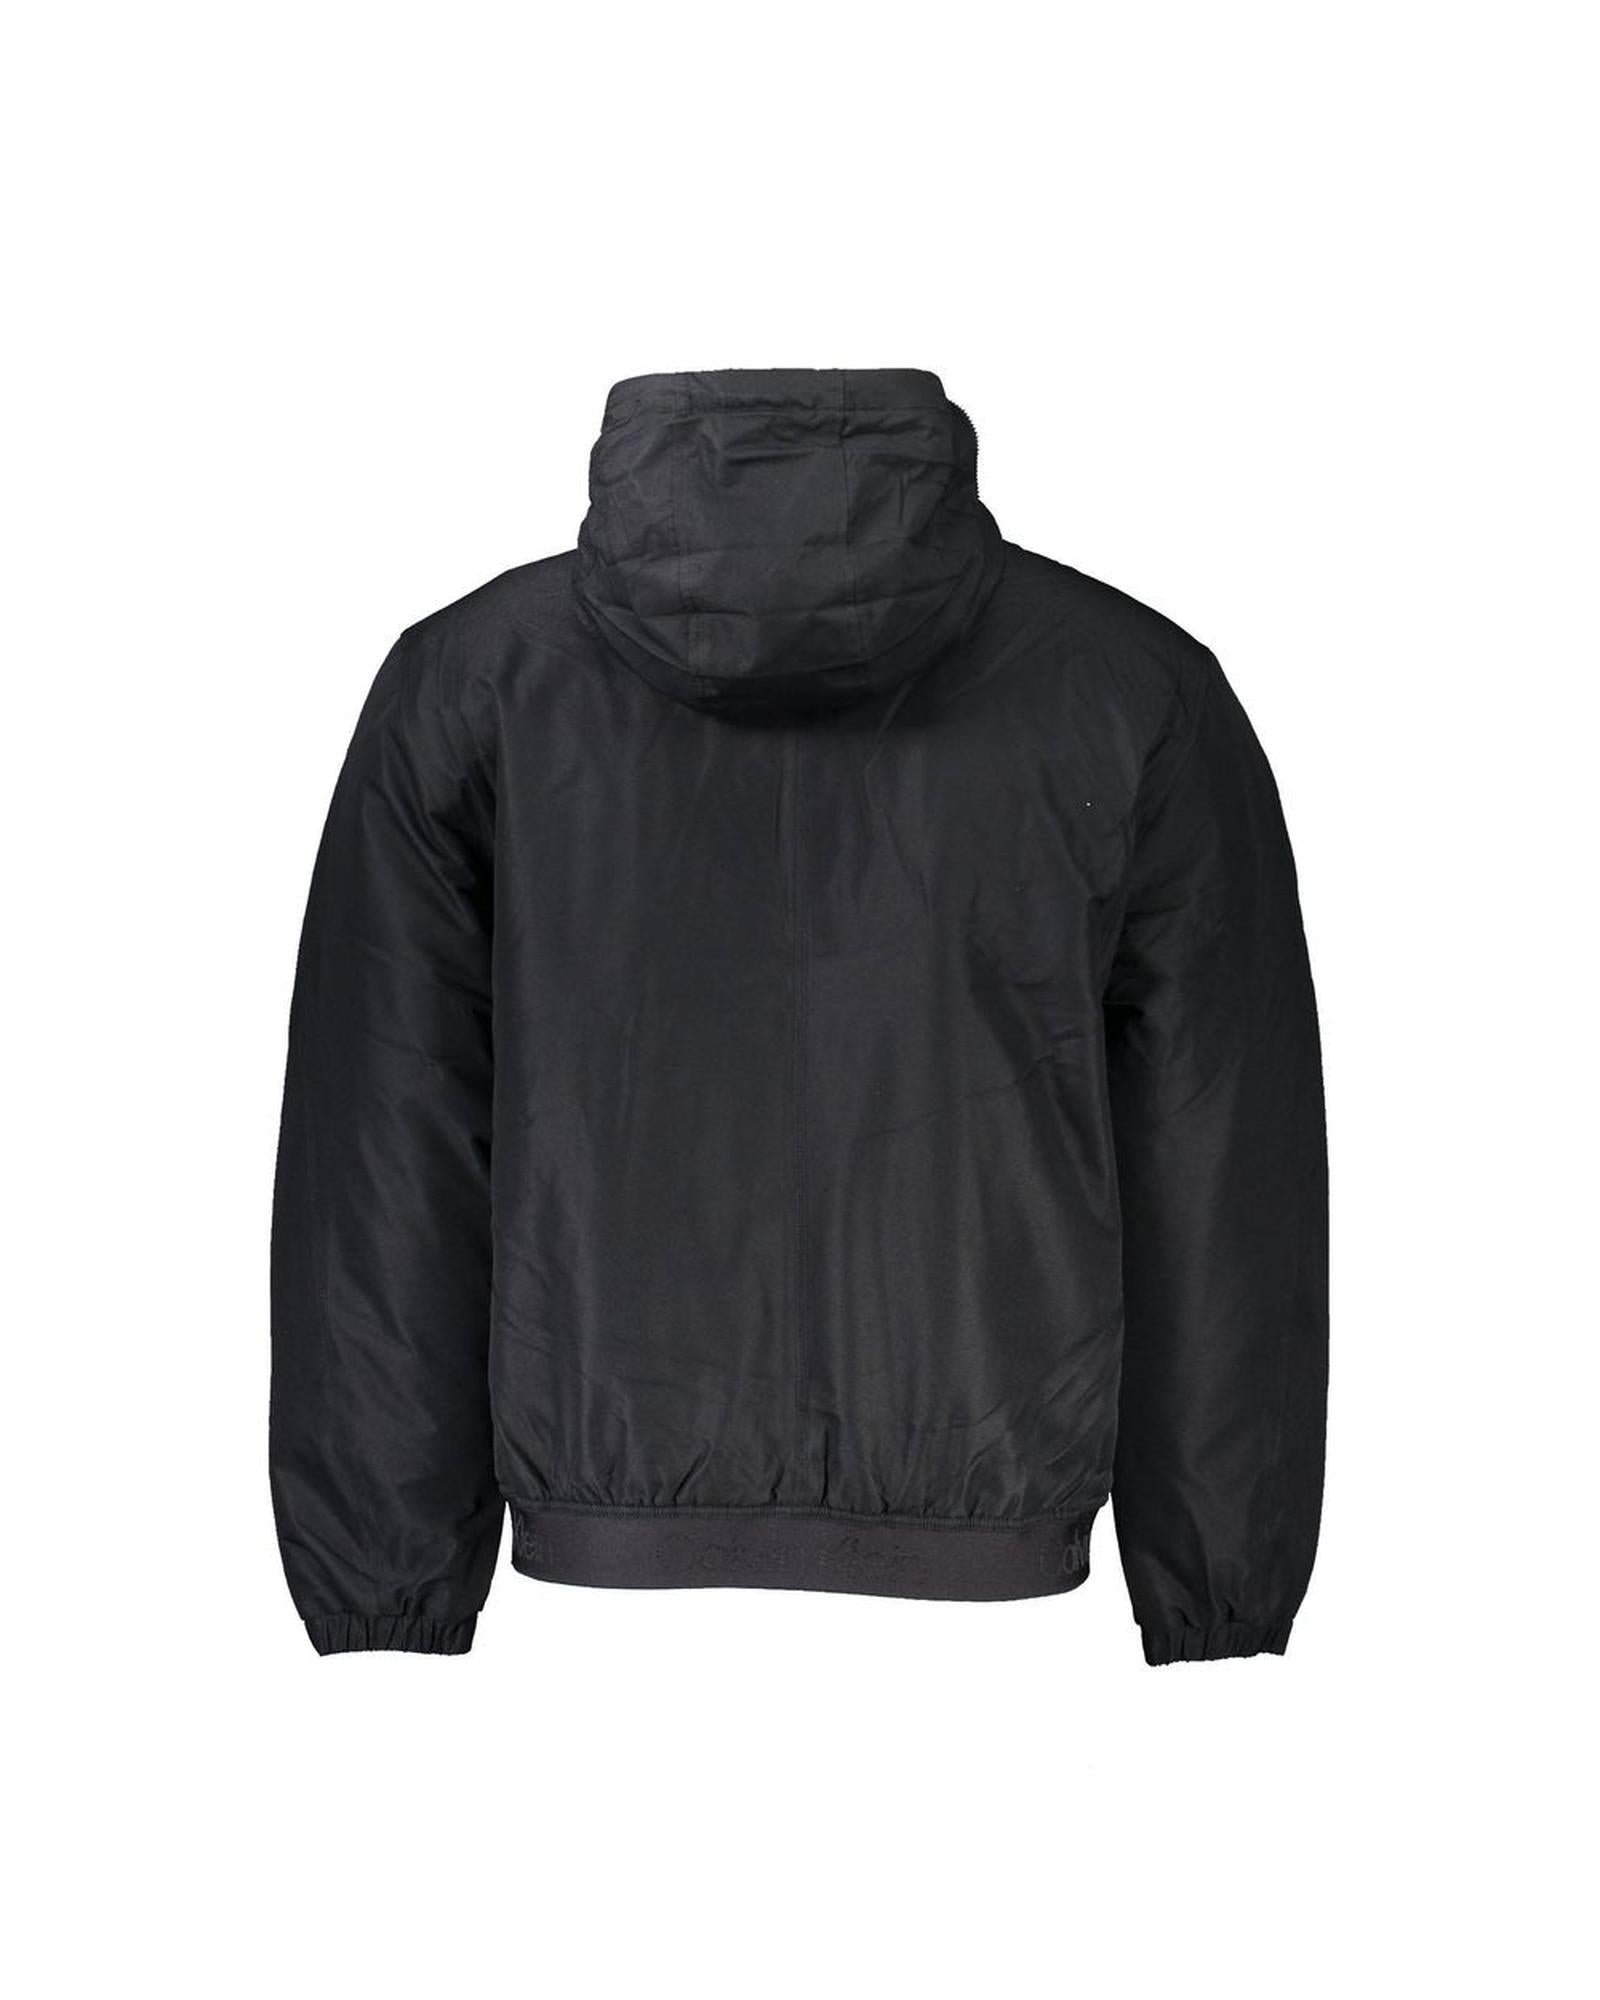 Men's Black Polyester Jacket - M